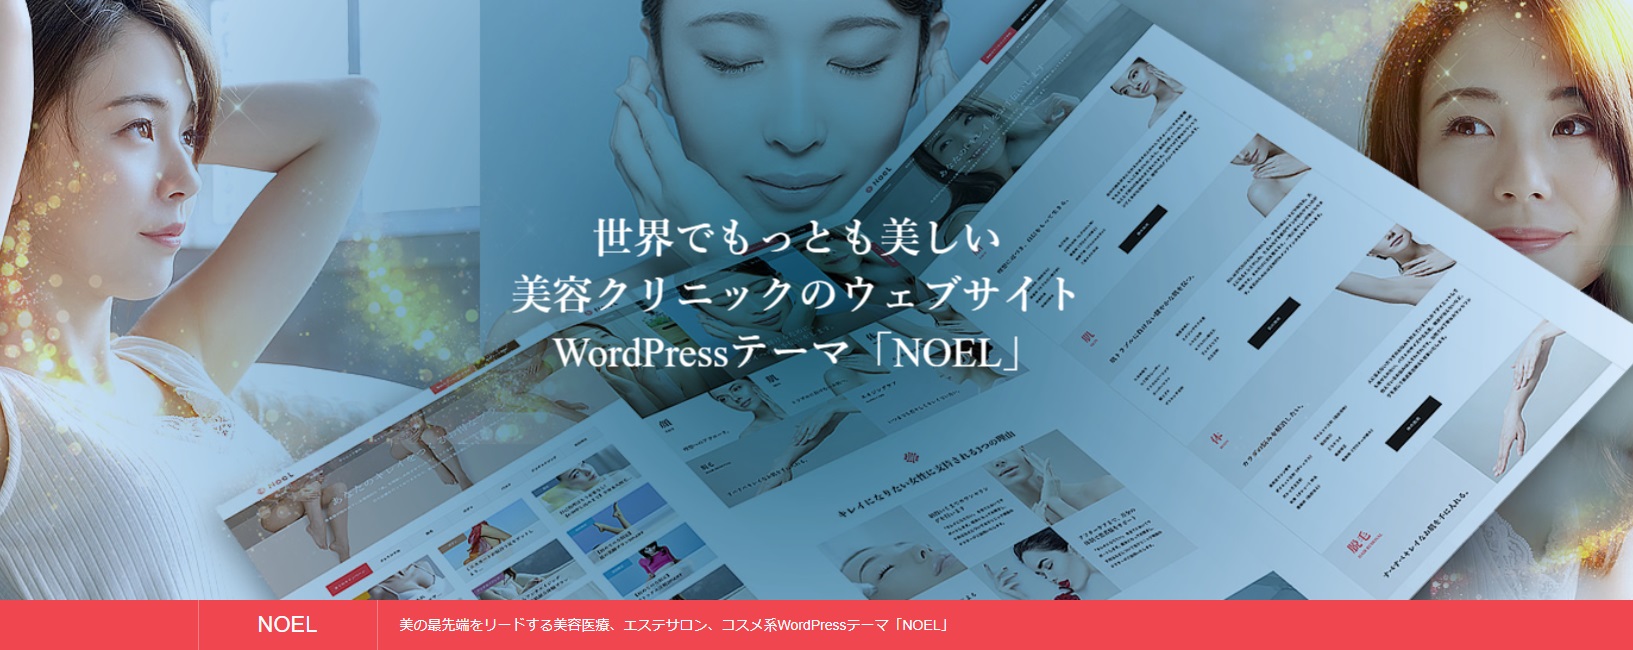 wordpress-theme-noel-tcd072